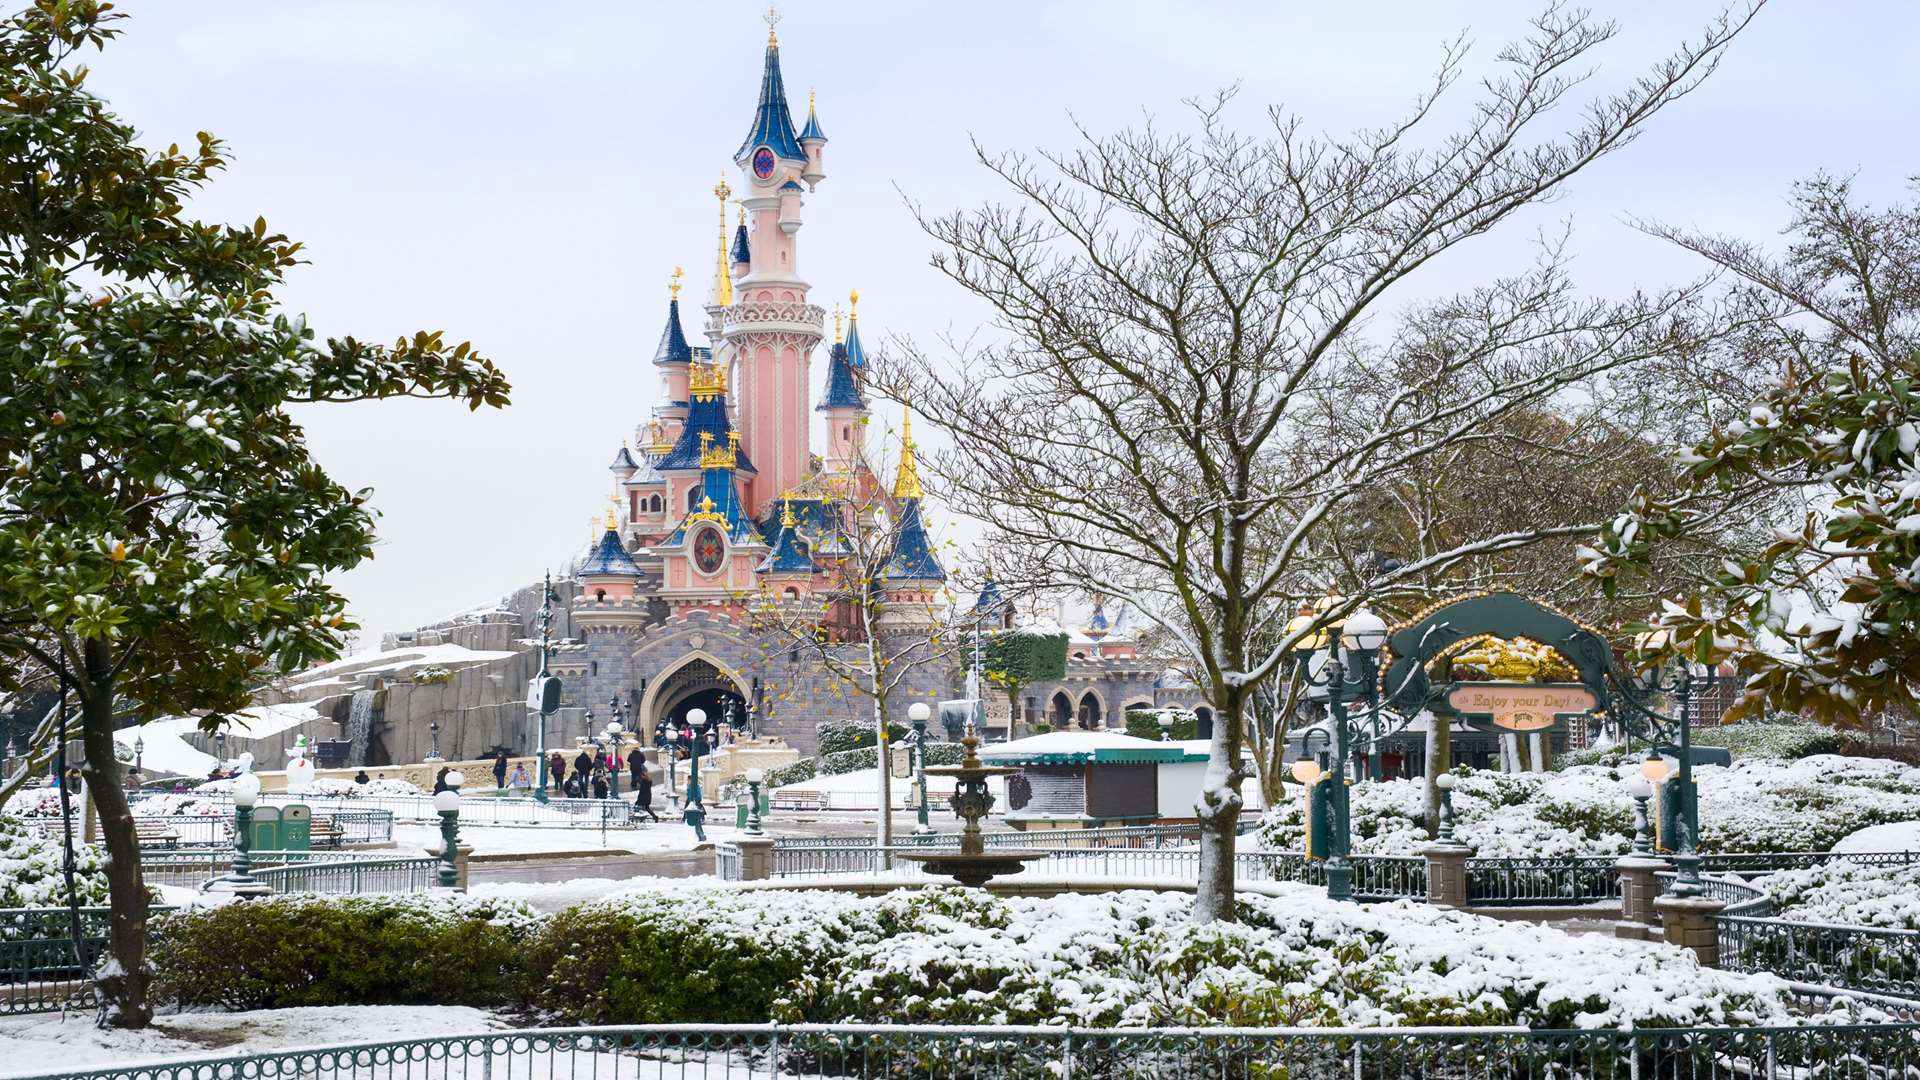 The Sleeping Beauty castle at Disneyland Paris